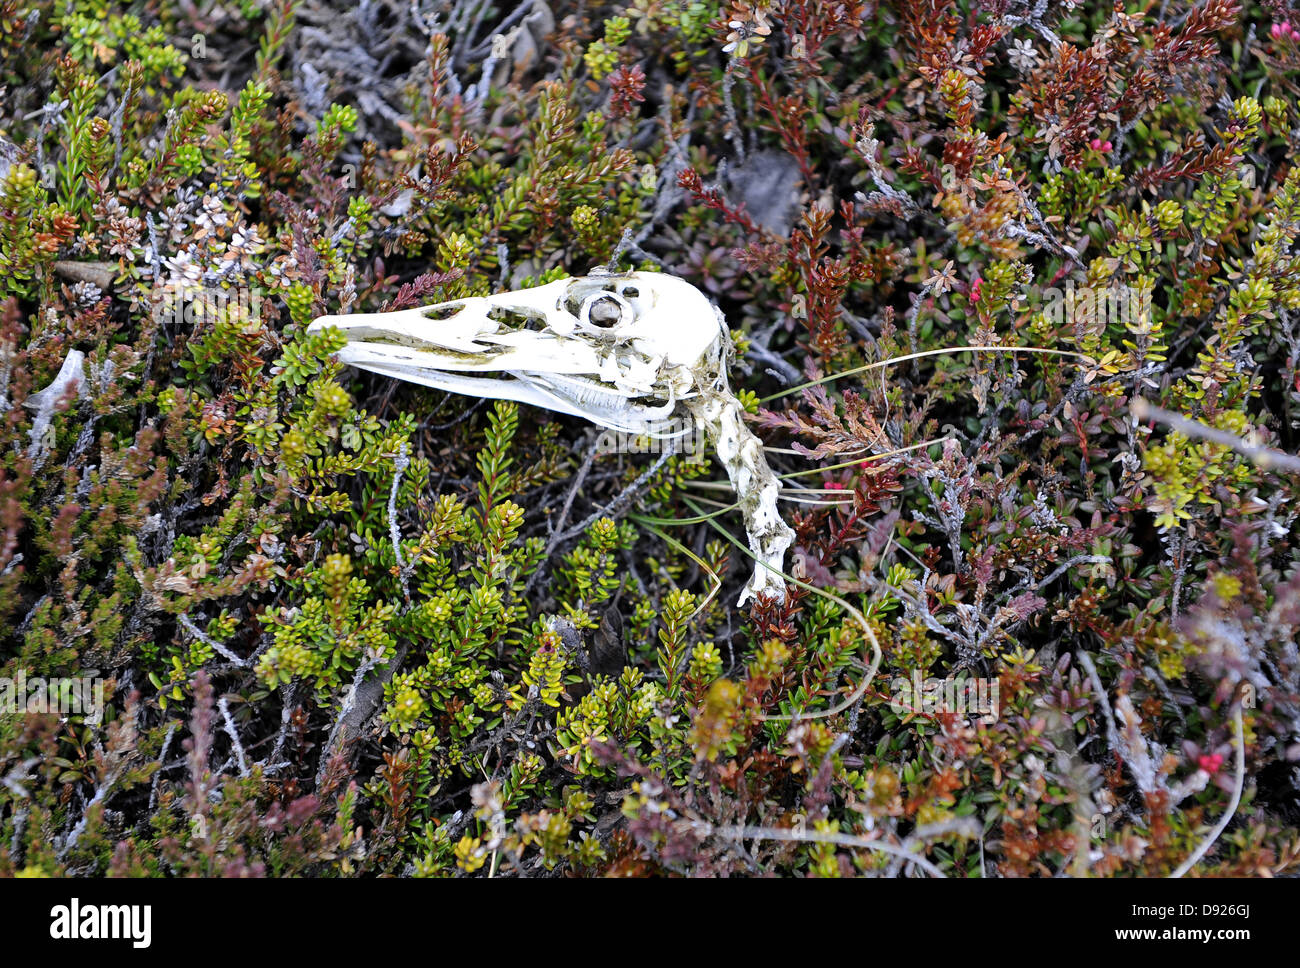 Vögel-Schädel, Dimmuborgir, Nordosten Islands, Island Stockfoto